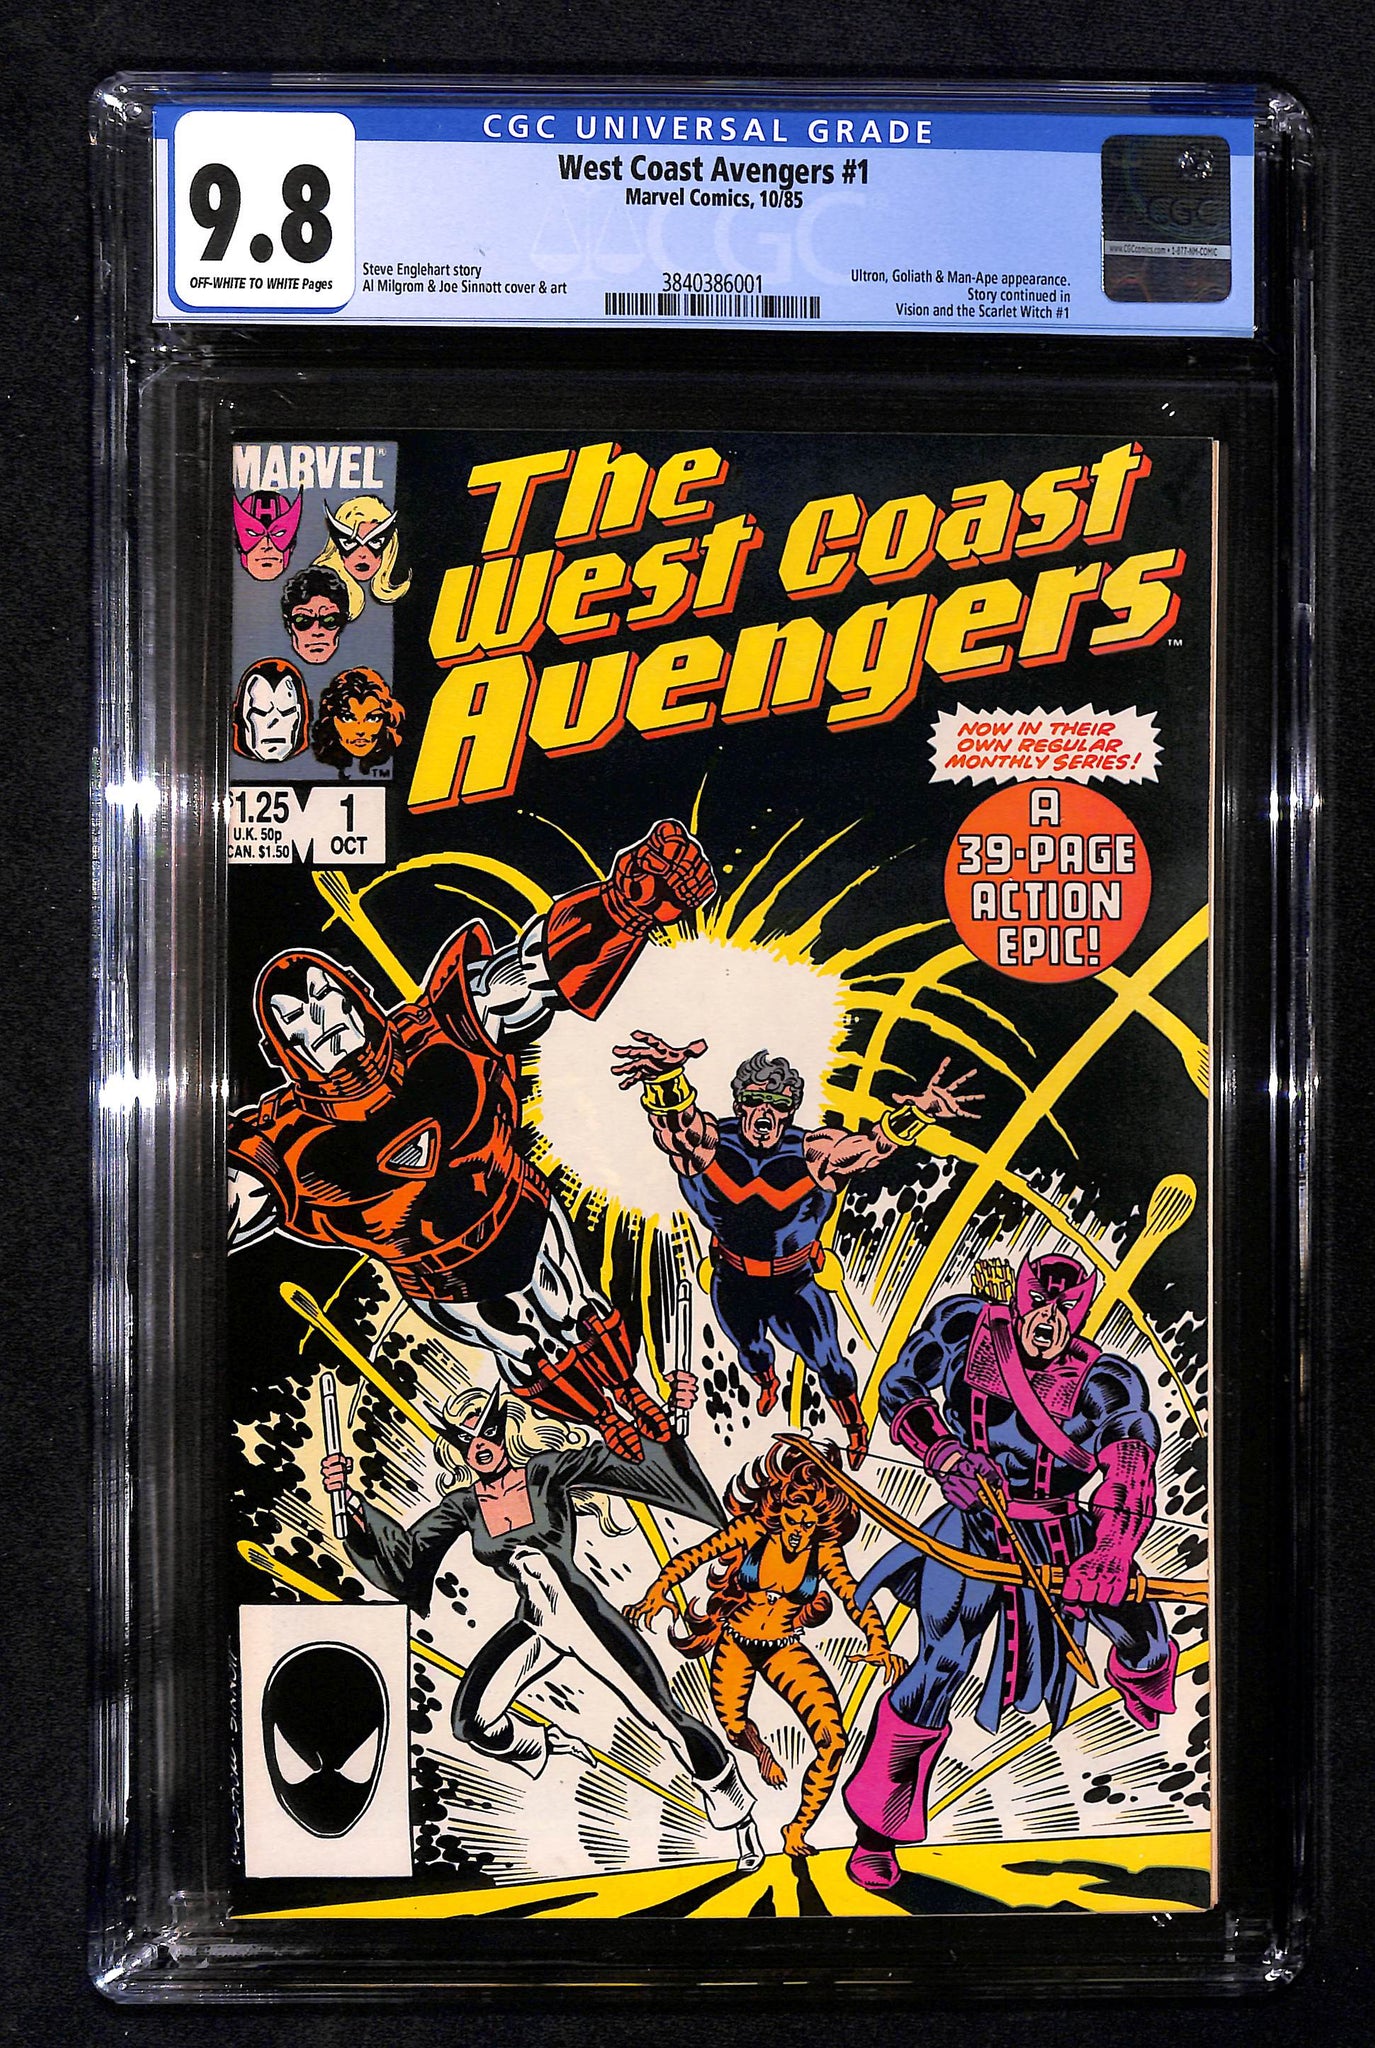 West Coast Avengers #1 CGC 9.8 Ultron, Goliath & Man-Ape appearance